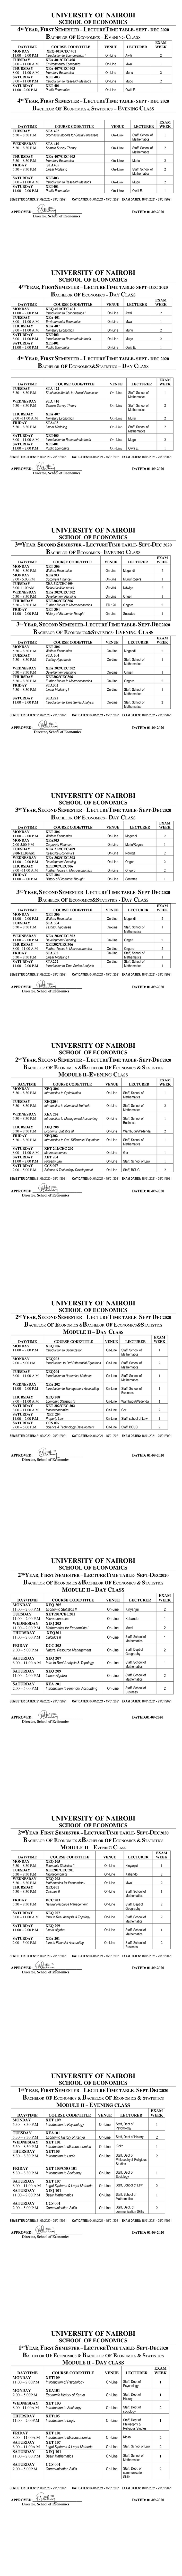 Economics-Module II - Lecture Timetable -Sept-20-Jan-21 REVISED-2